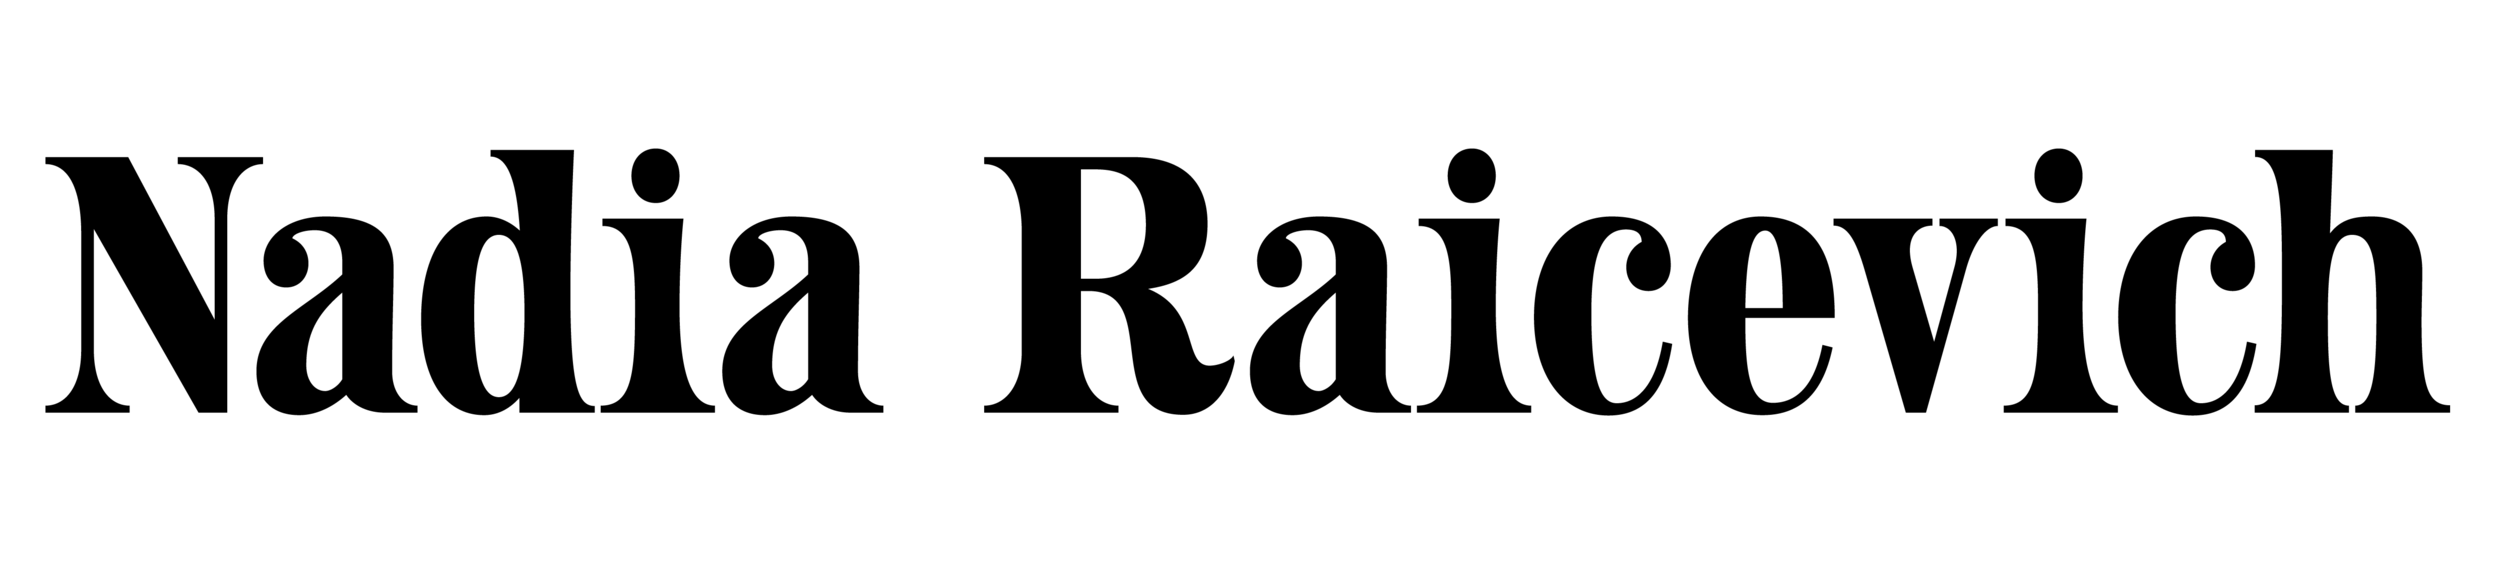 NADIA-RAICEVICH-logo-01-01.png